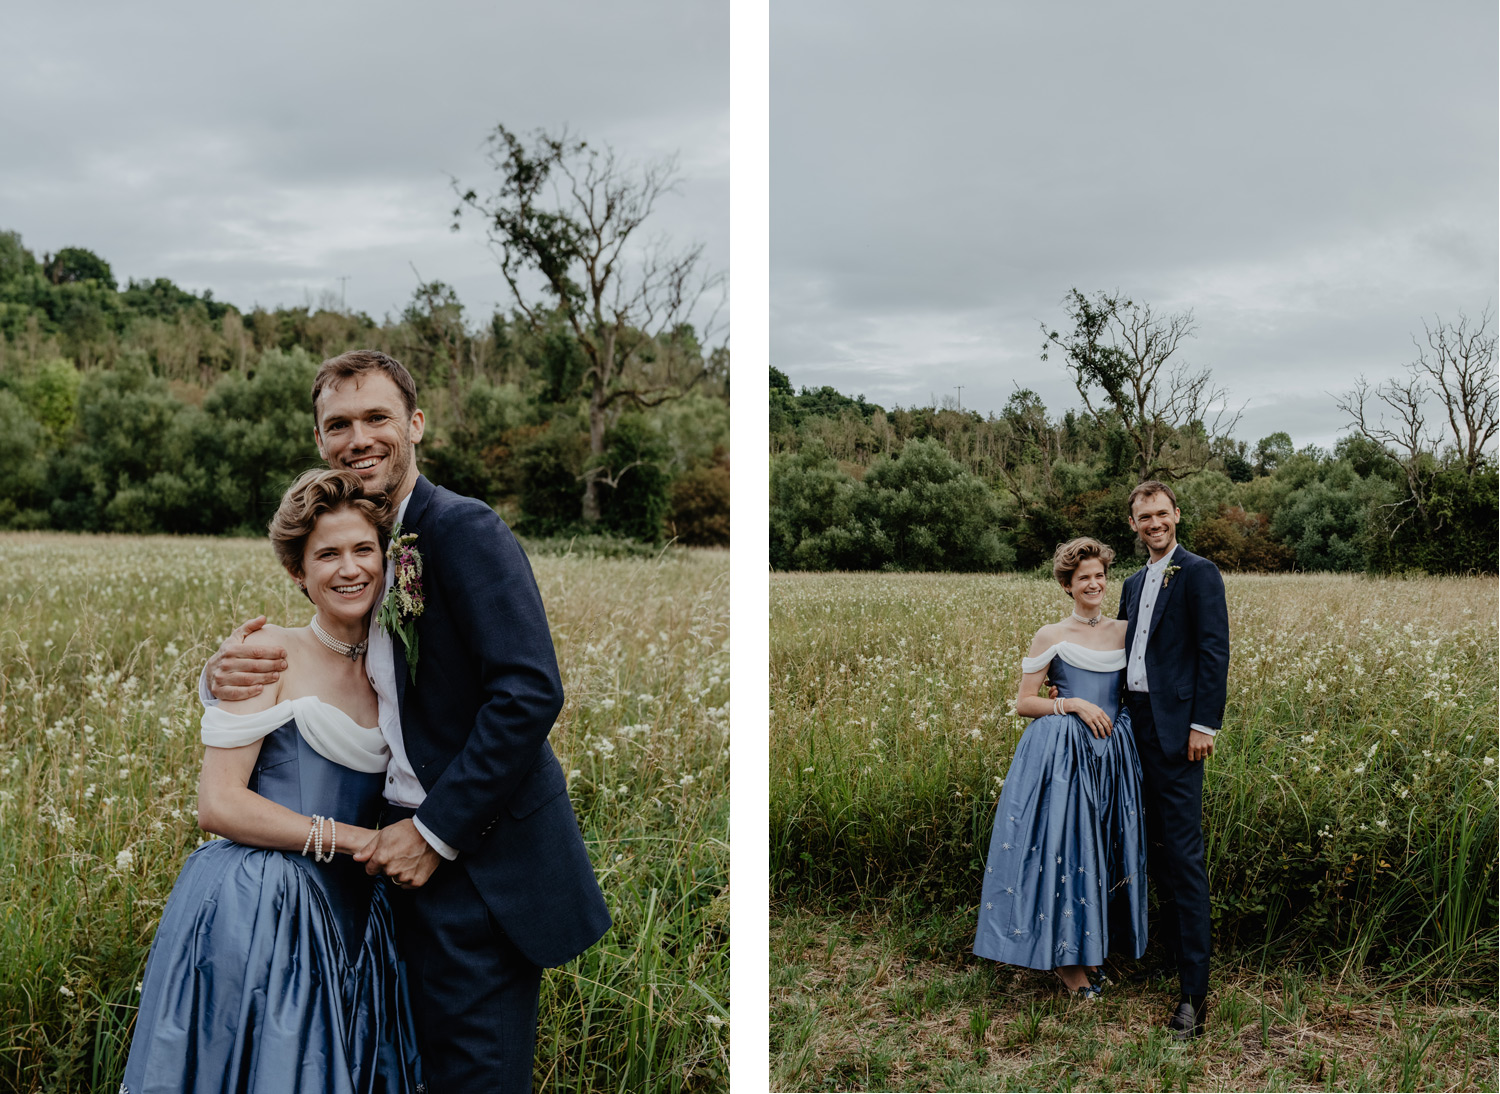 english country garden wedding stretch tent marquee meadow by anne schwarz blue wedding dress